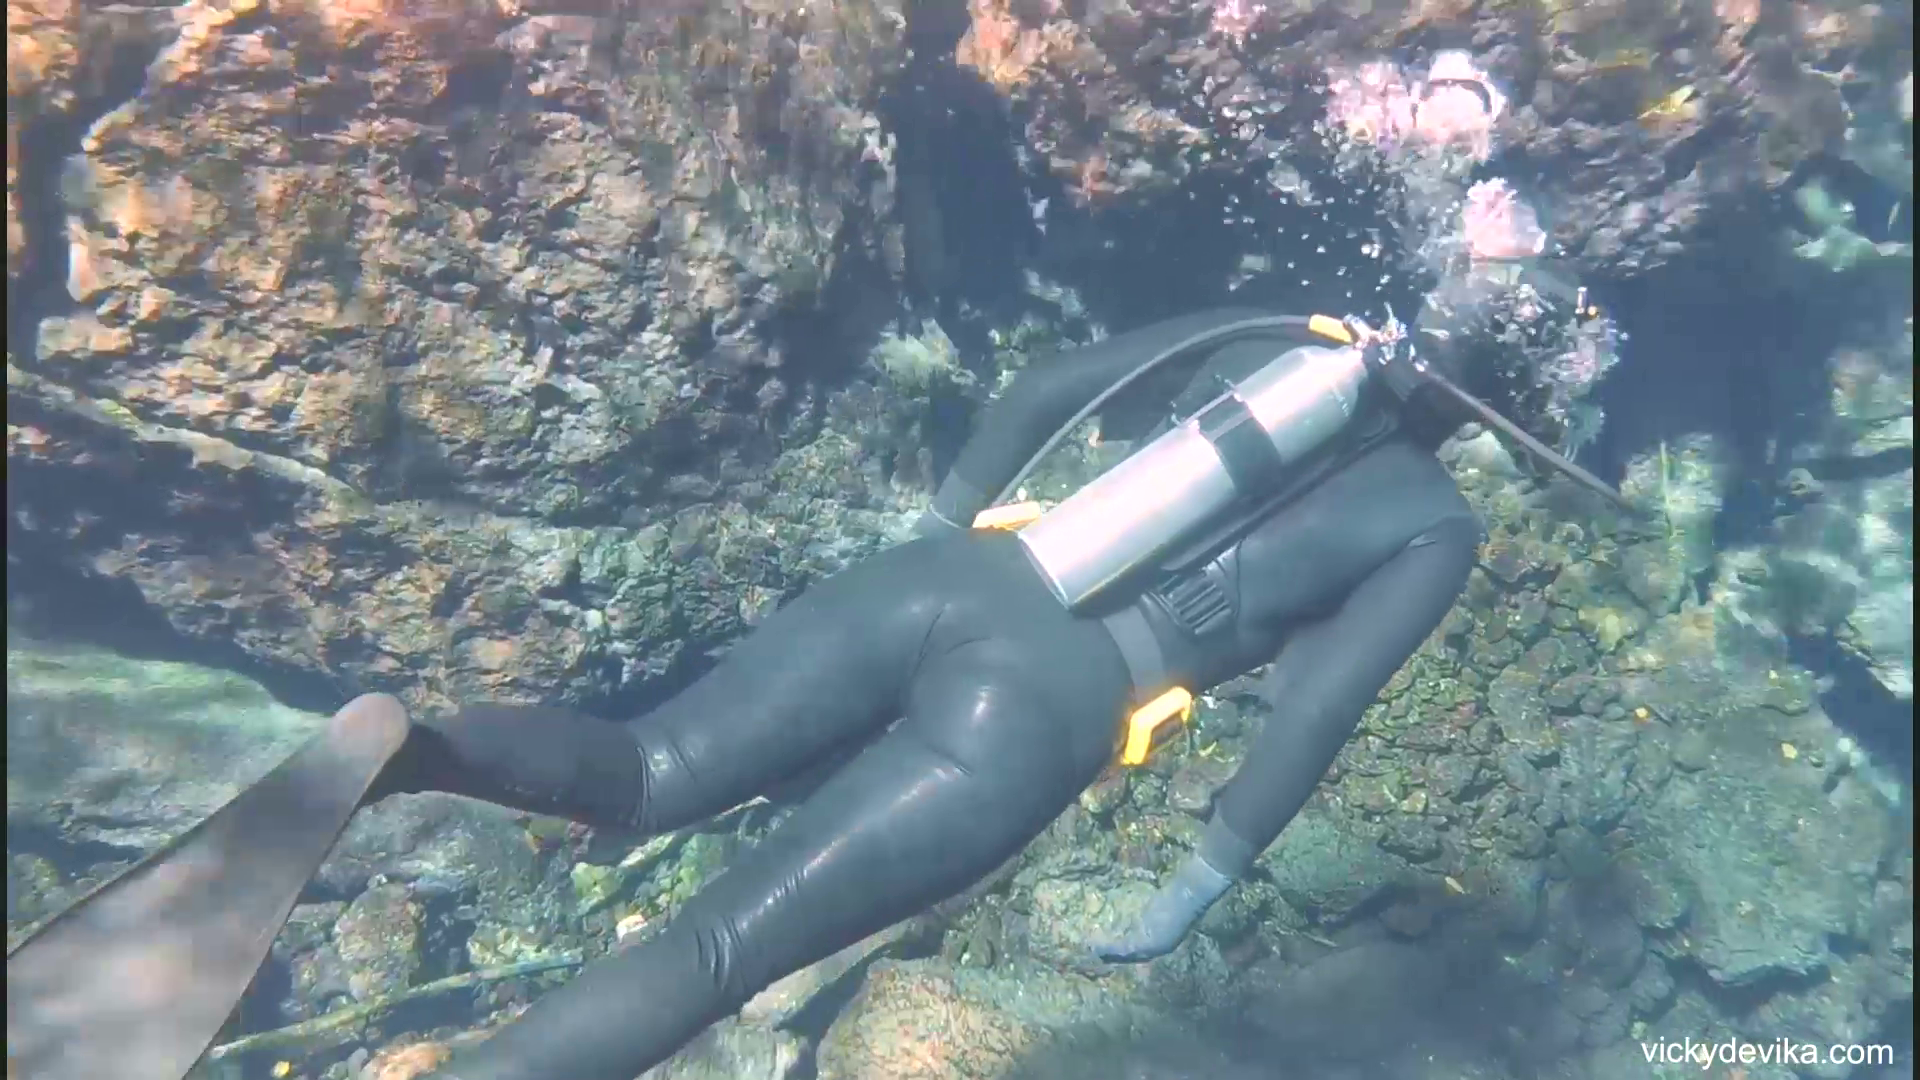 Kelly monaco scuba diving accident